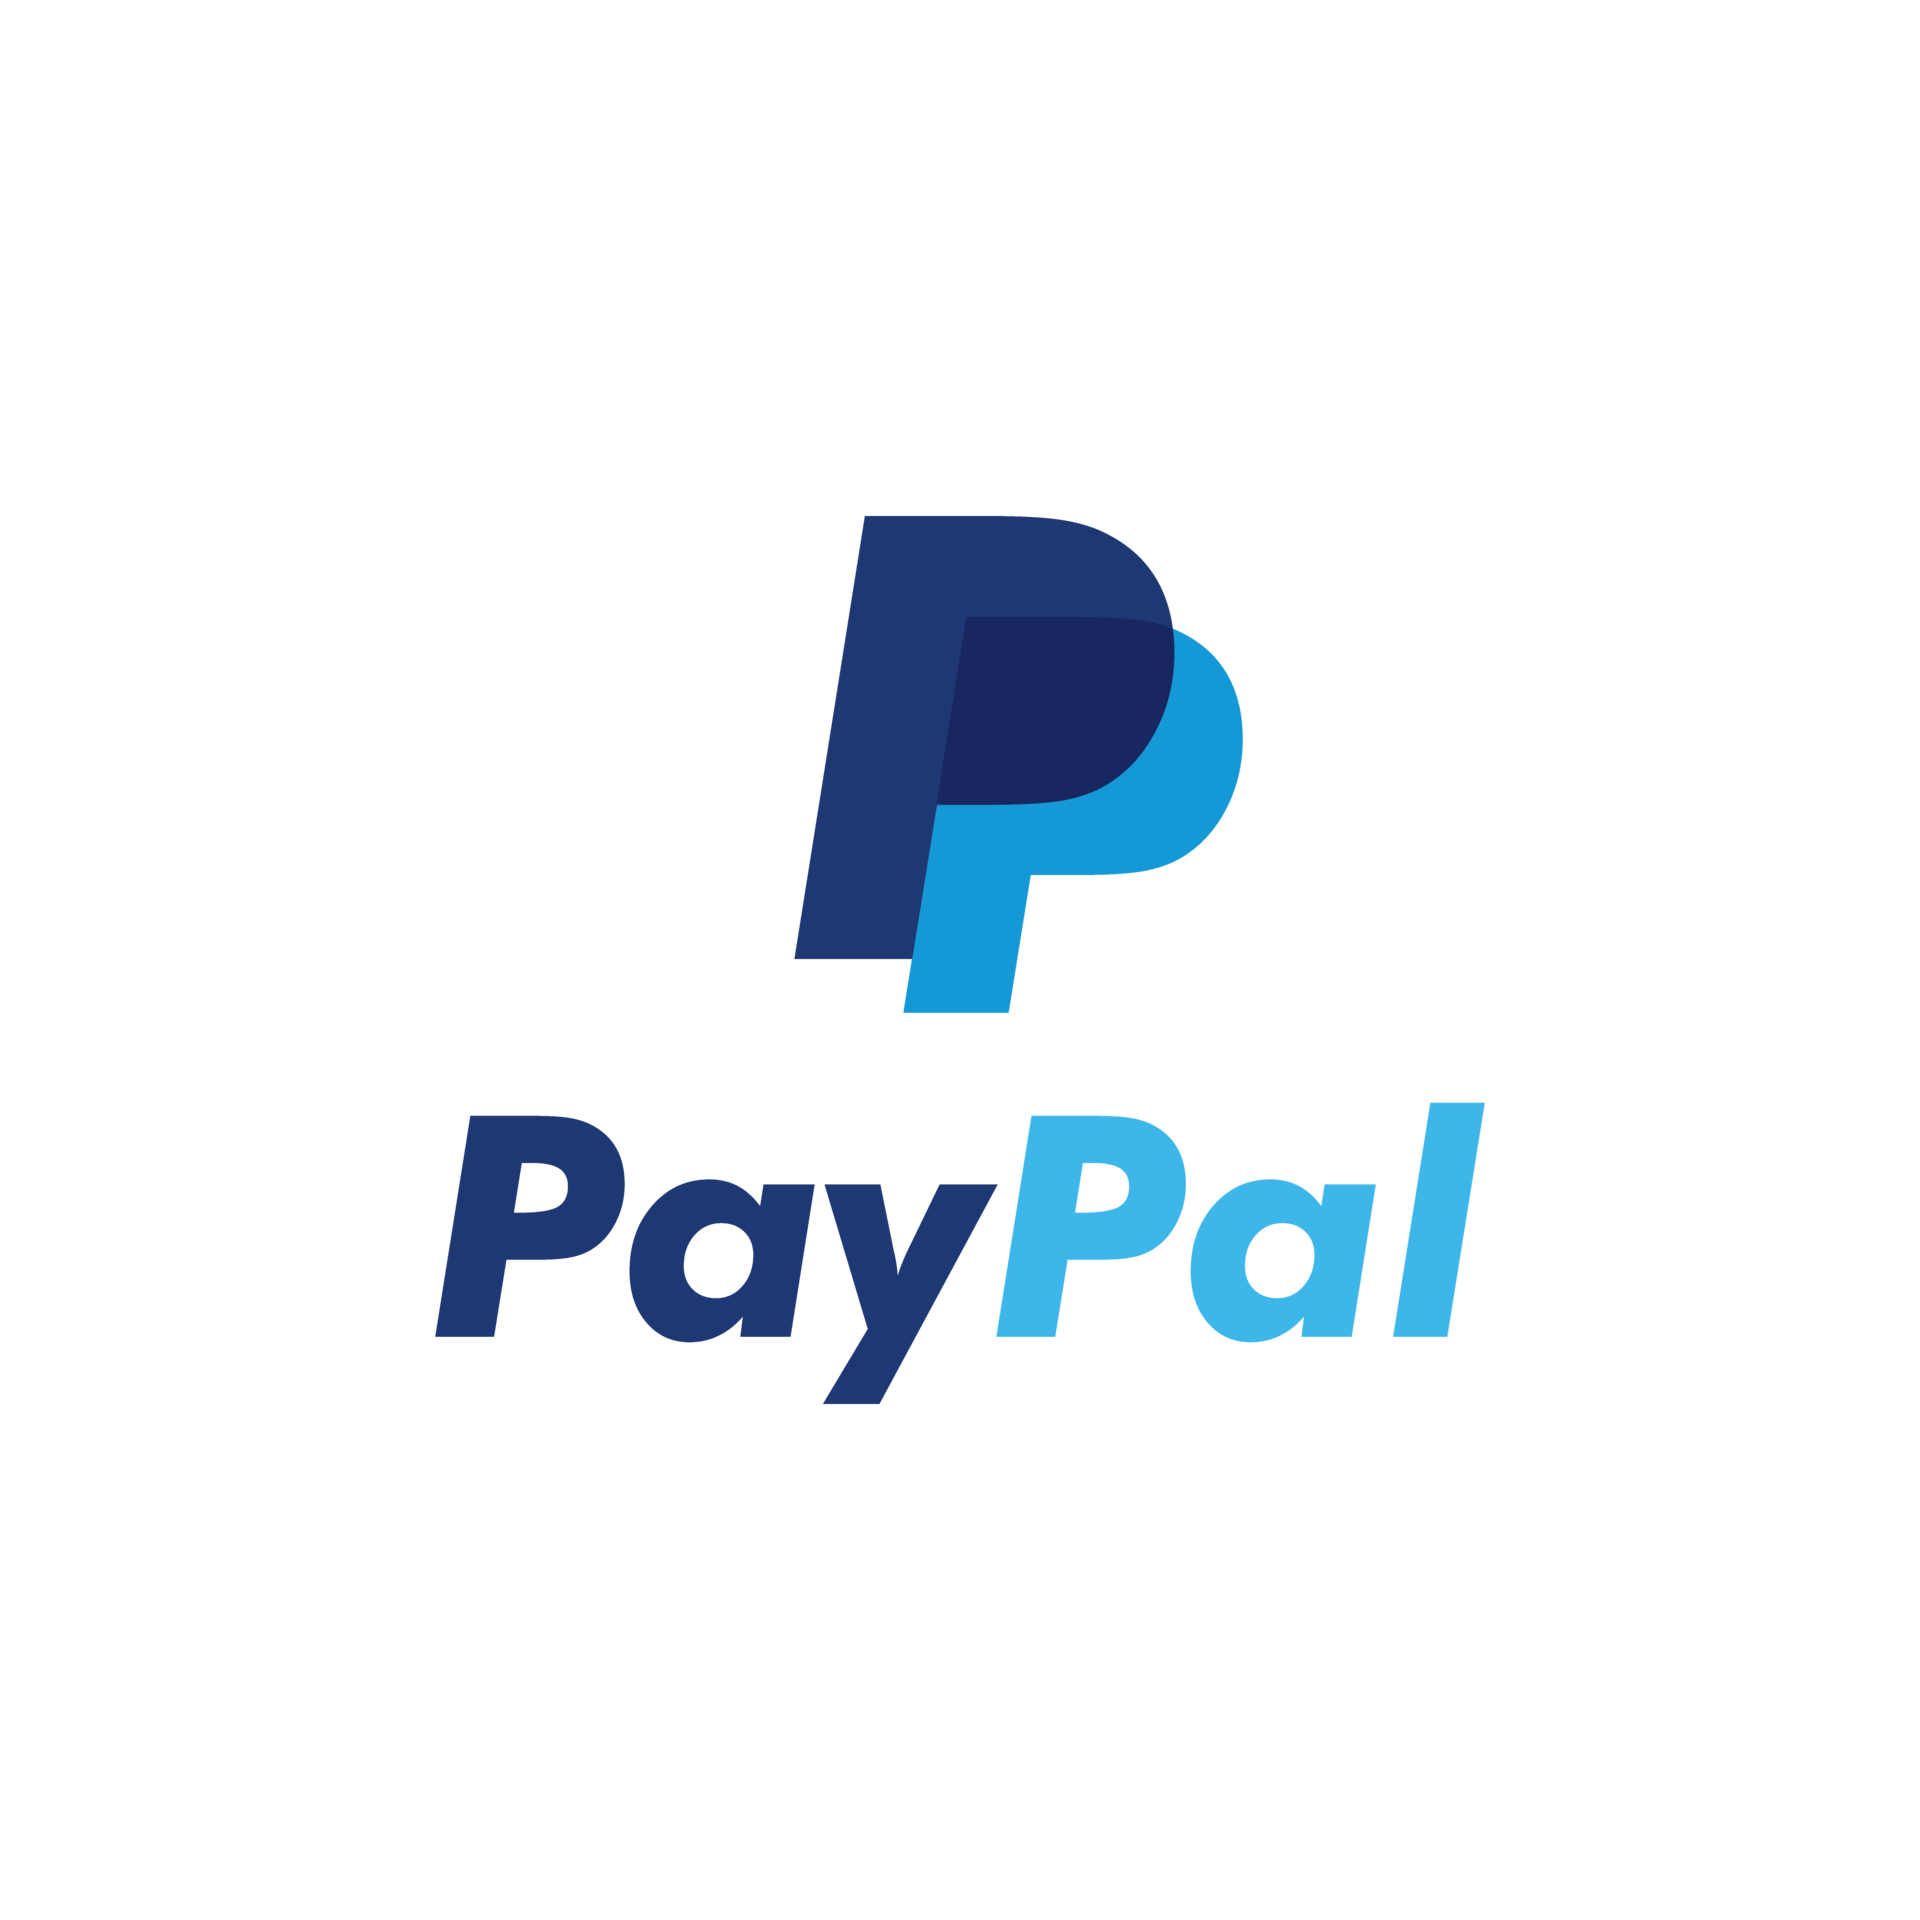 images/paypal-logo-transparent-free-png.webp